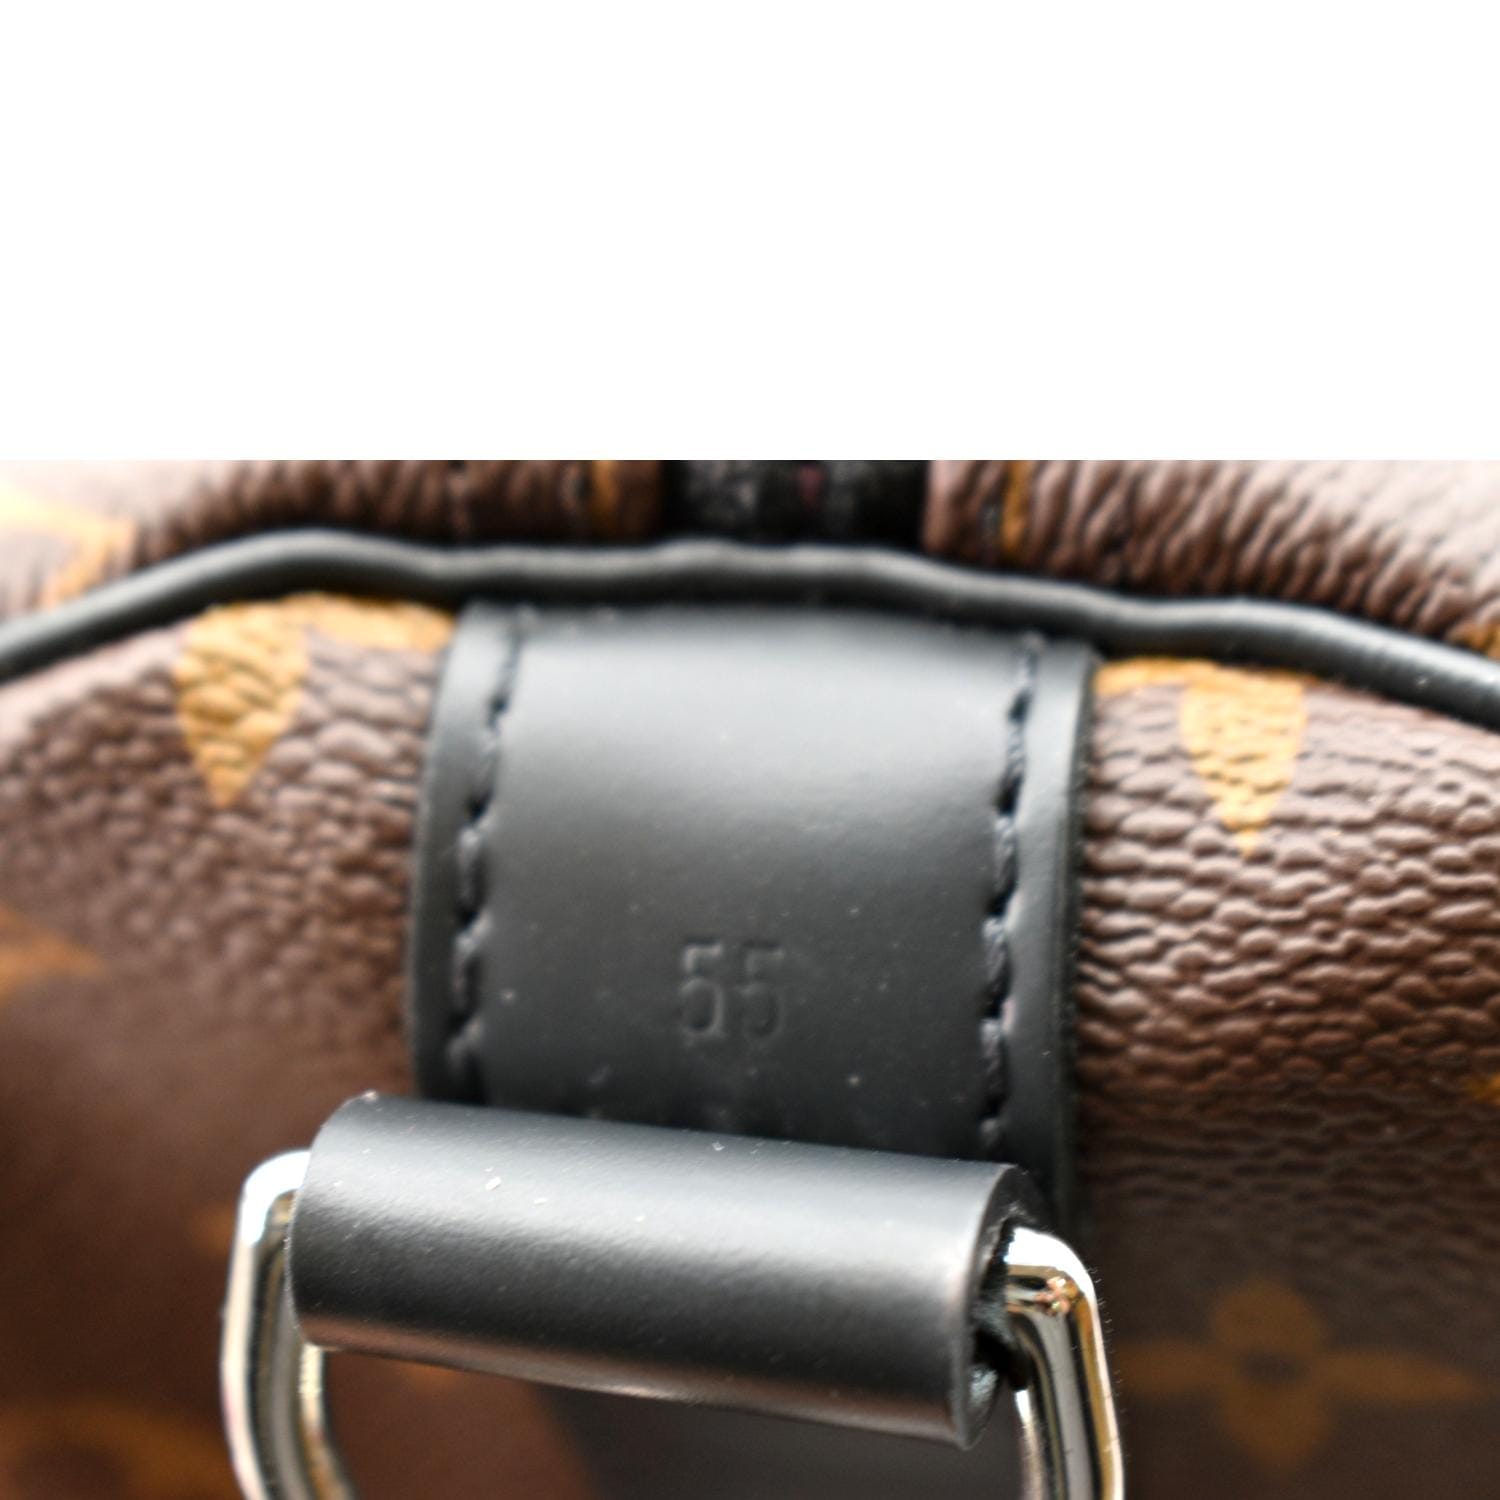 Louis Vuitton Keepall Travel bag 346757